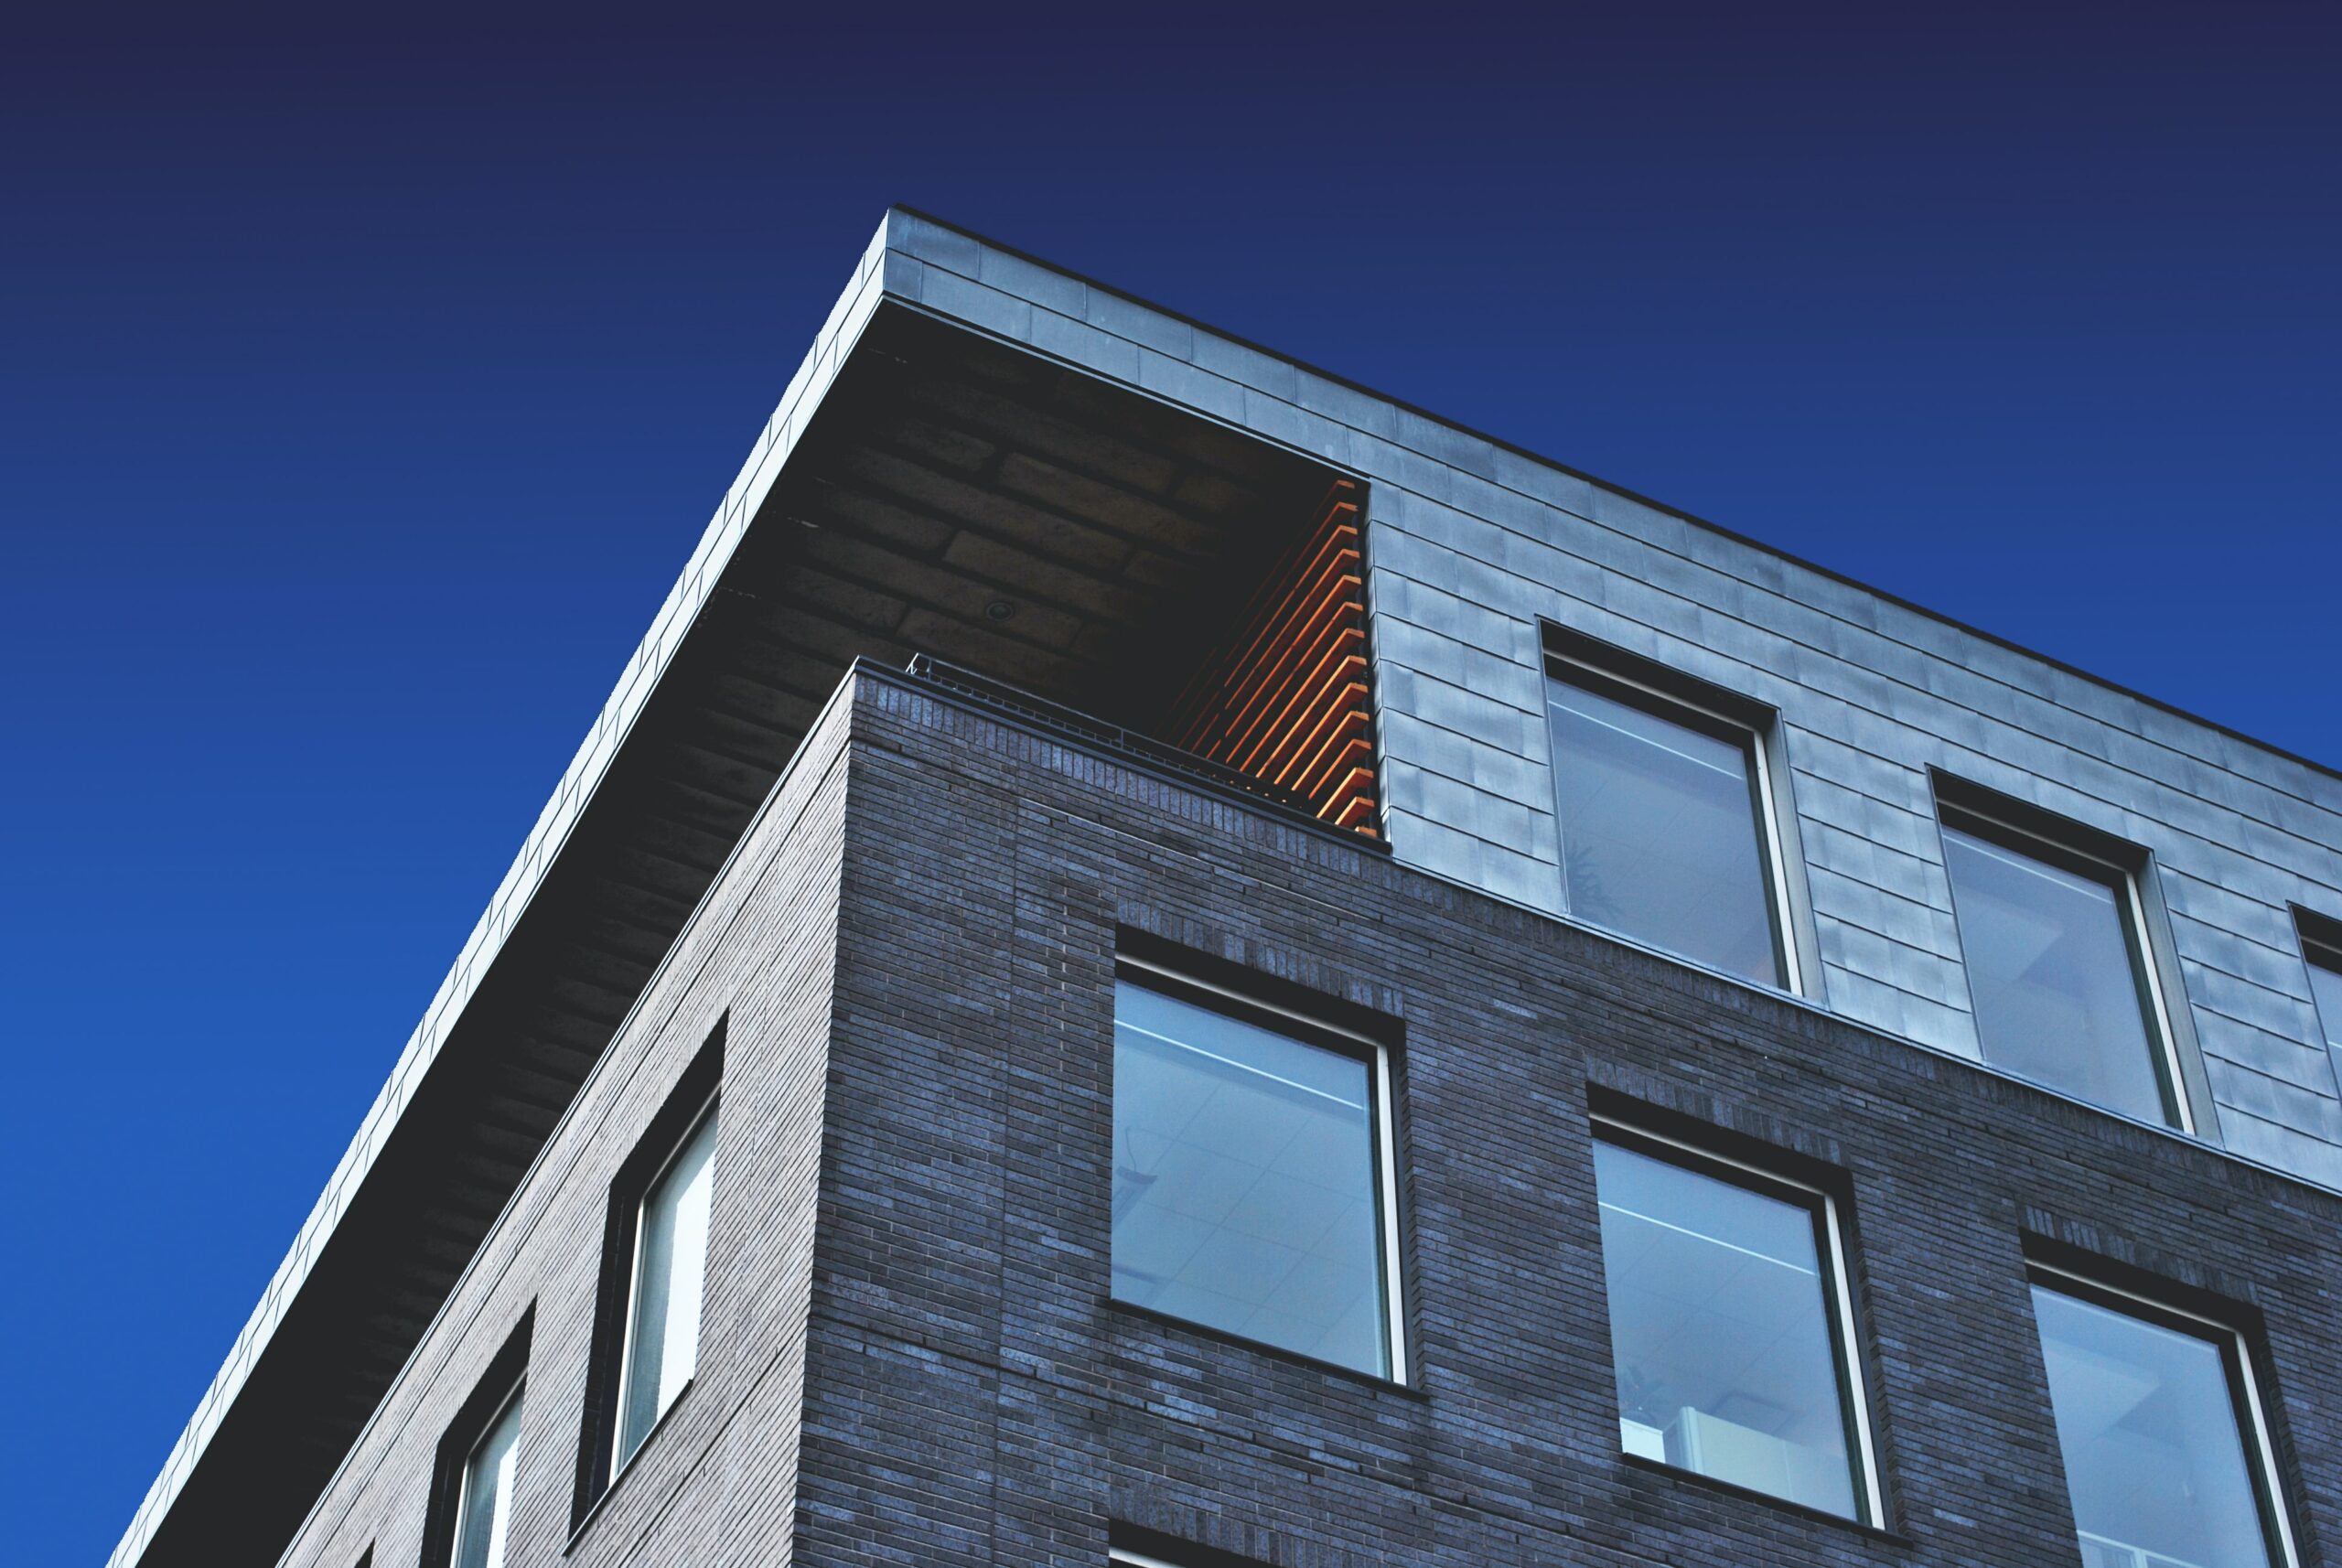 Concrete and brick building lines against dark blue sky